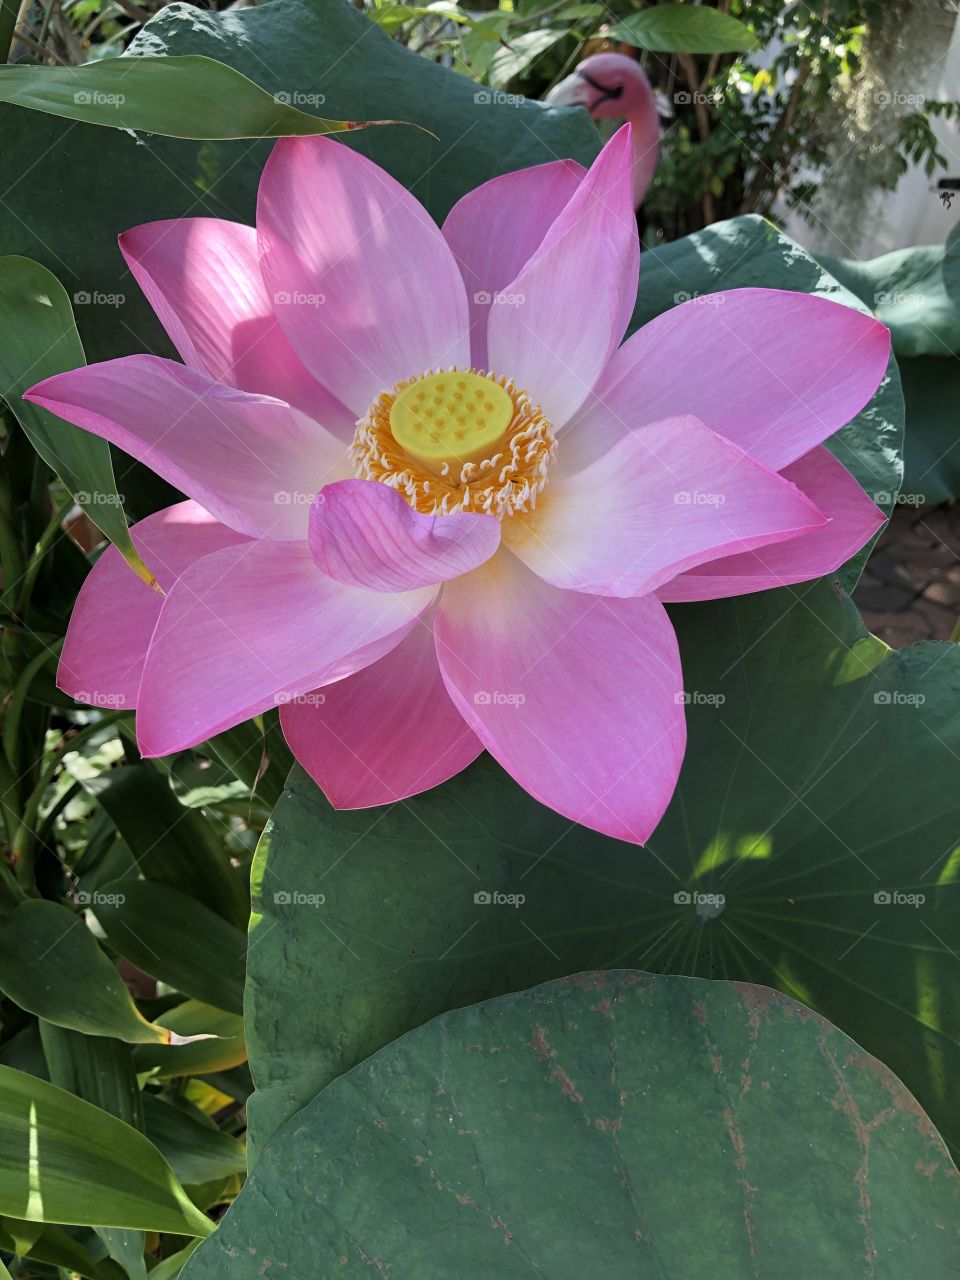 Flower # pink lotus # colorful 